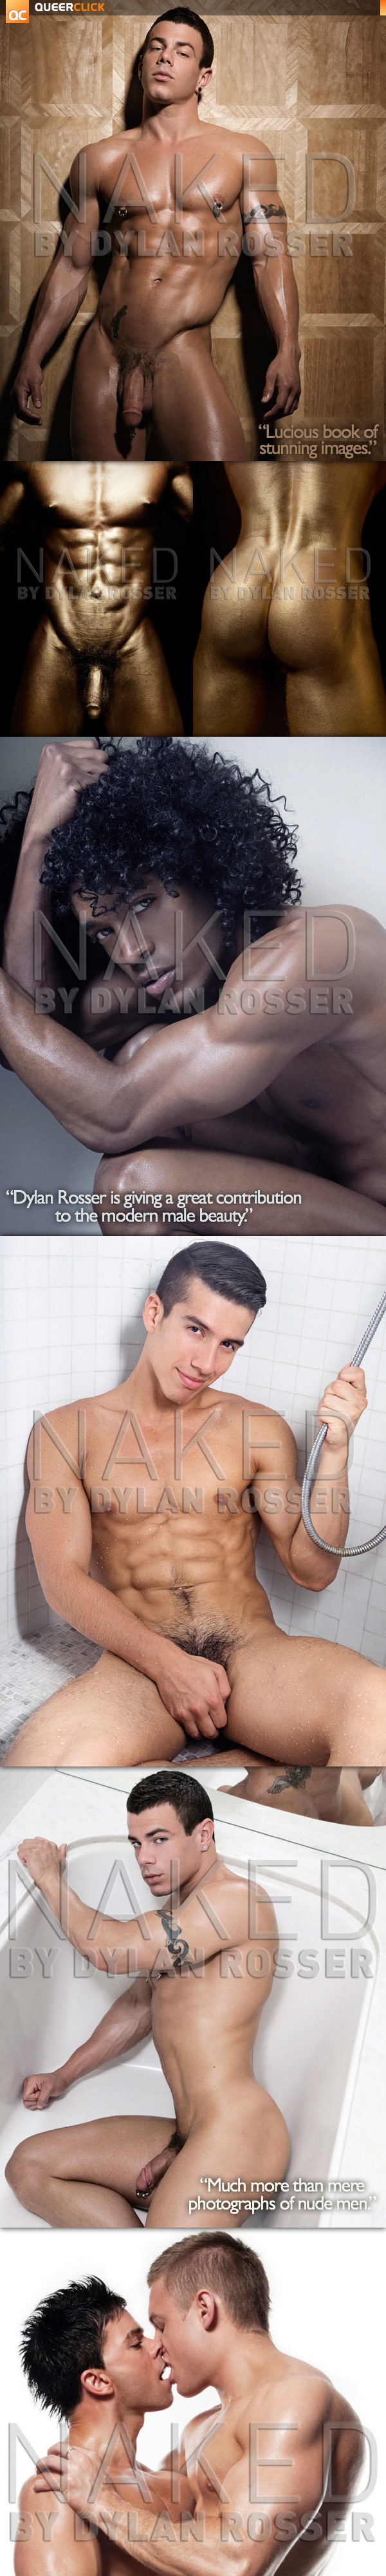 Dylan Rosser Naked preview